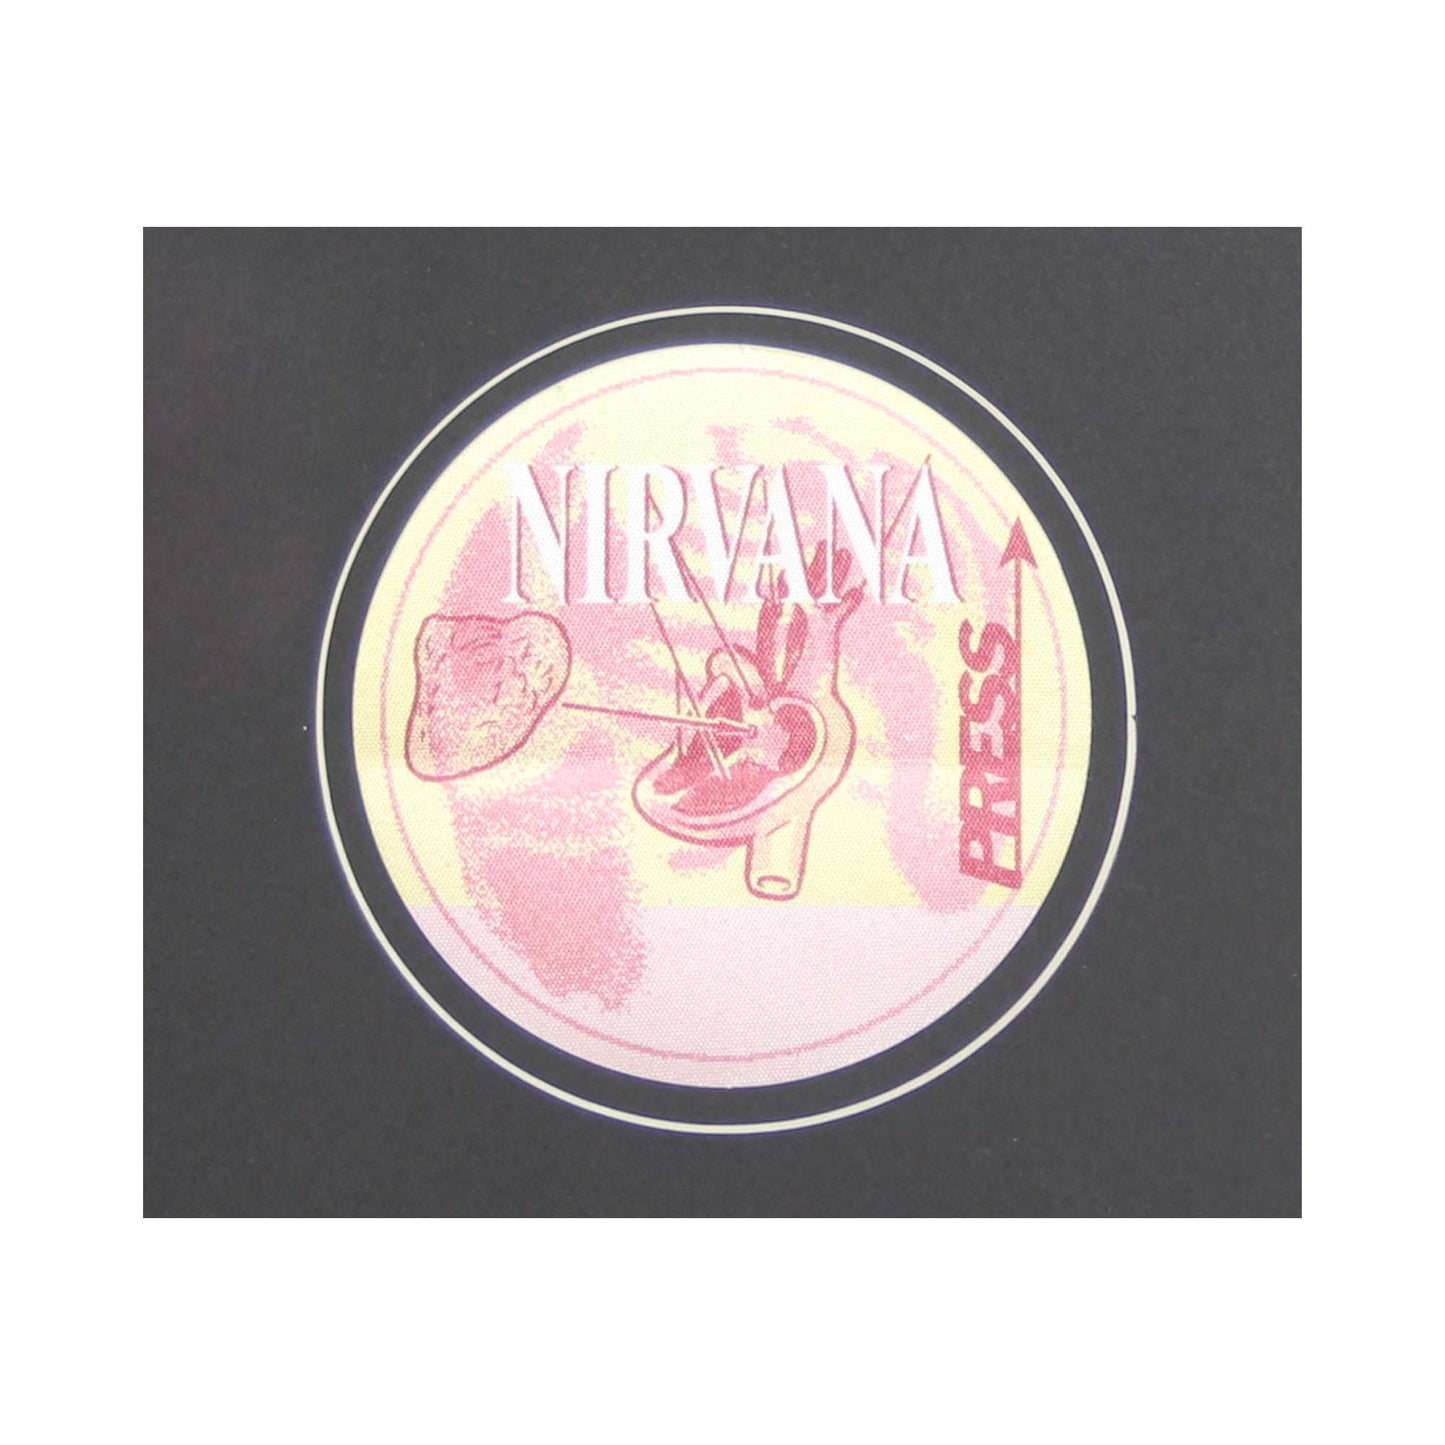 Nirvana Backstage Pass Memorabilia Ticket